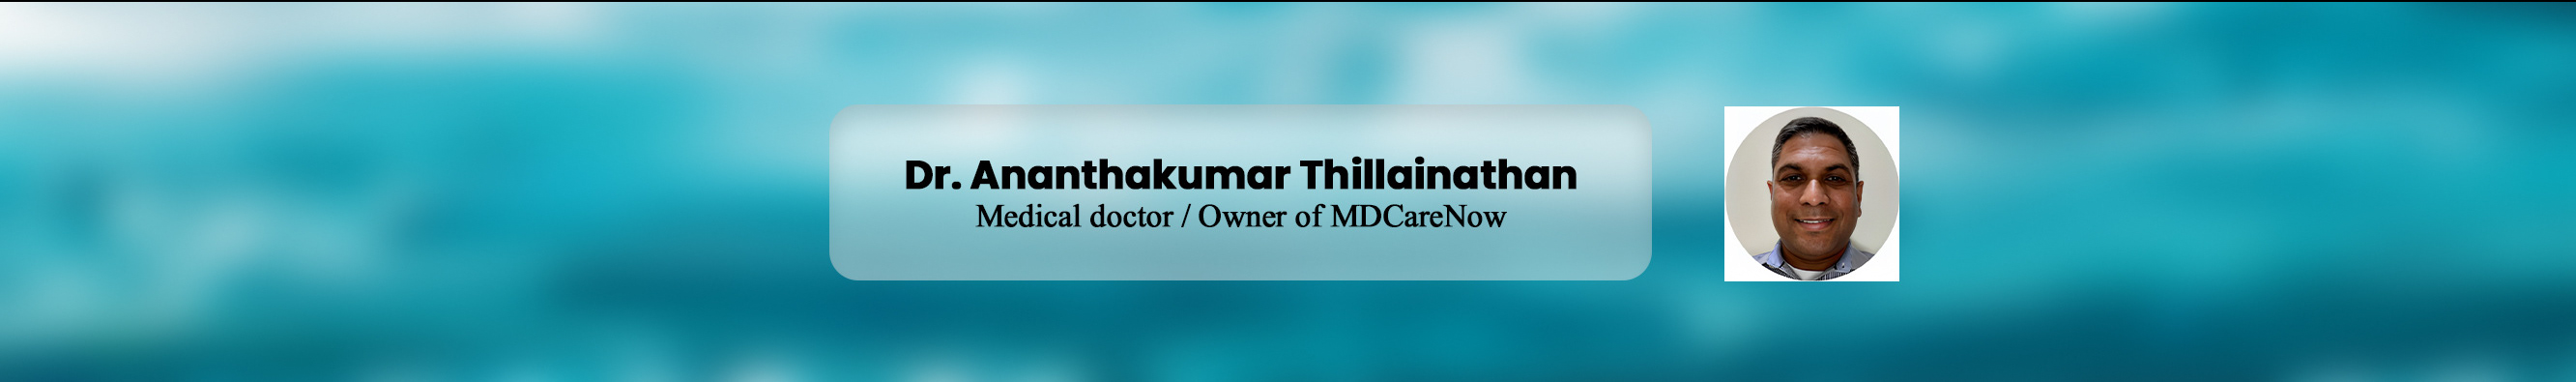 Dr. Ananthakumar Thillainathan's profile banner